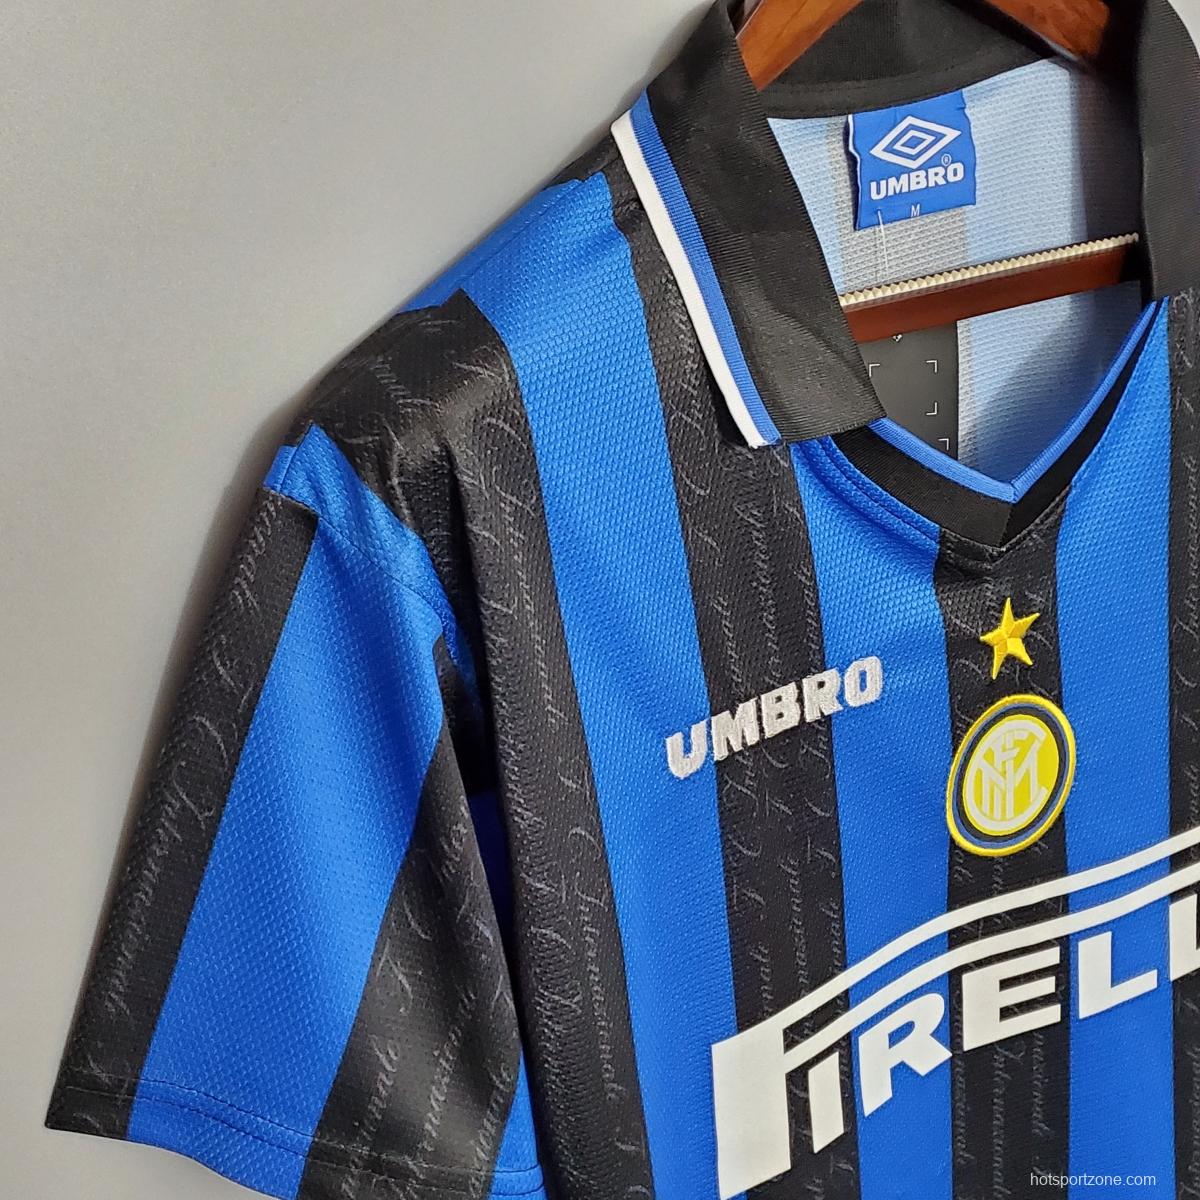 Retro 97/98 Inter Milan home Soccer Jersey